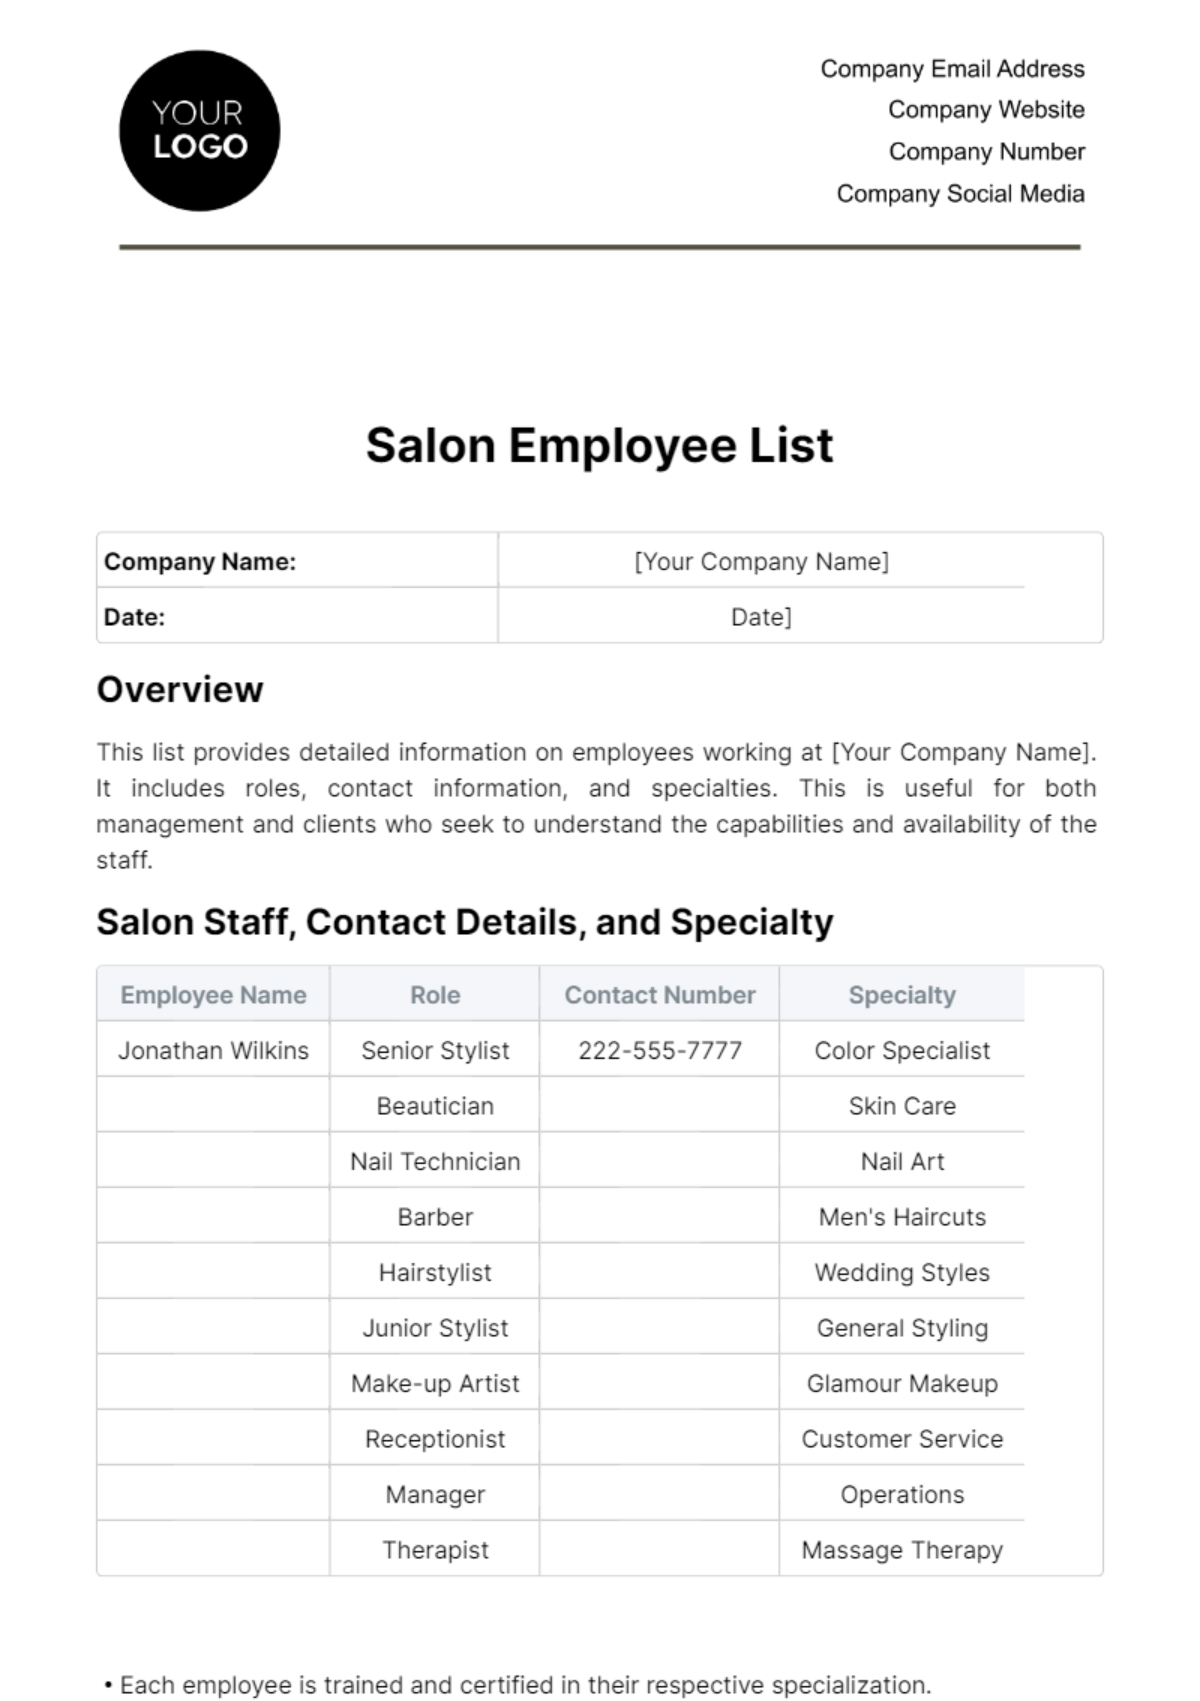 Free Salon Employee List Template